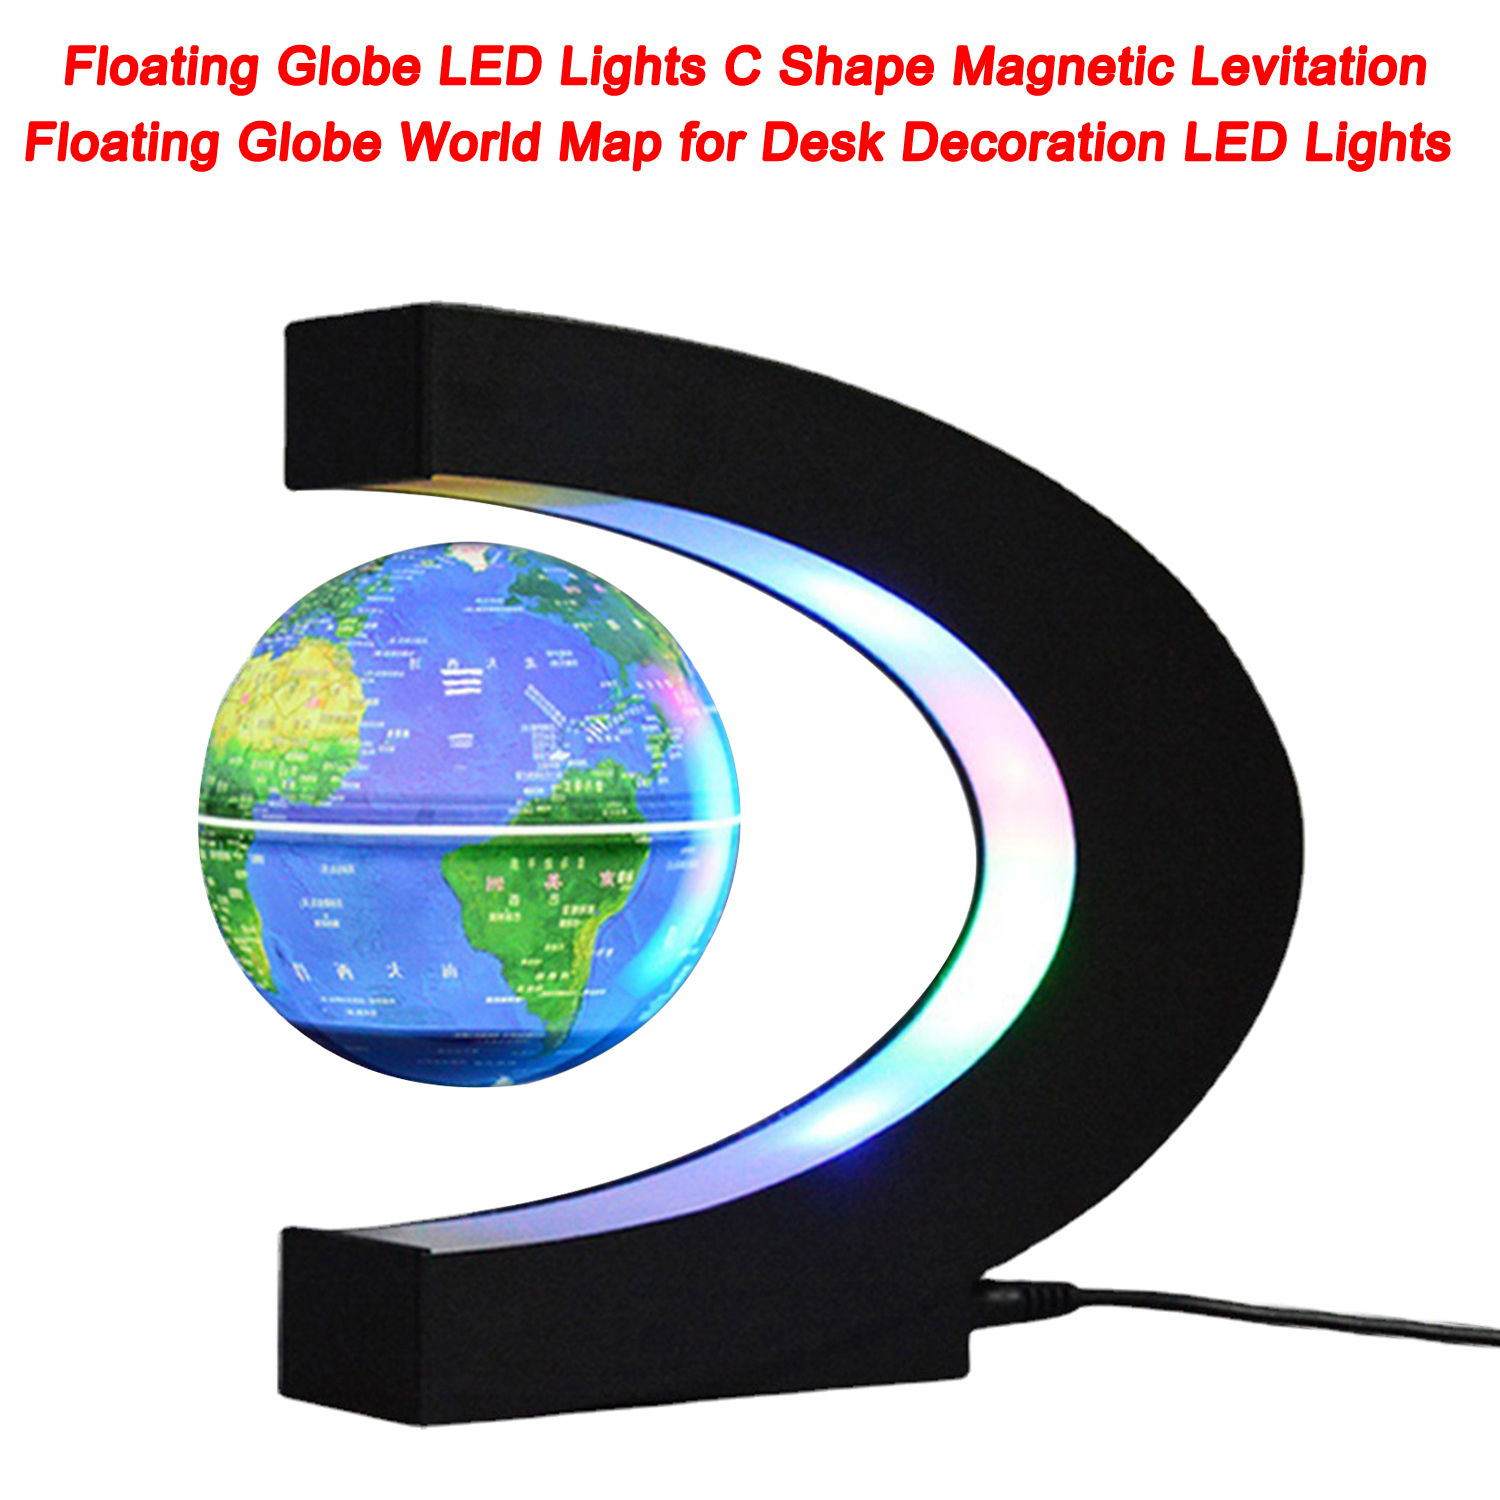 Floating Globe LED Lights C Shape Magnetic Levitation Floating Globe World Map for Desk Decoration LED Lights 